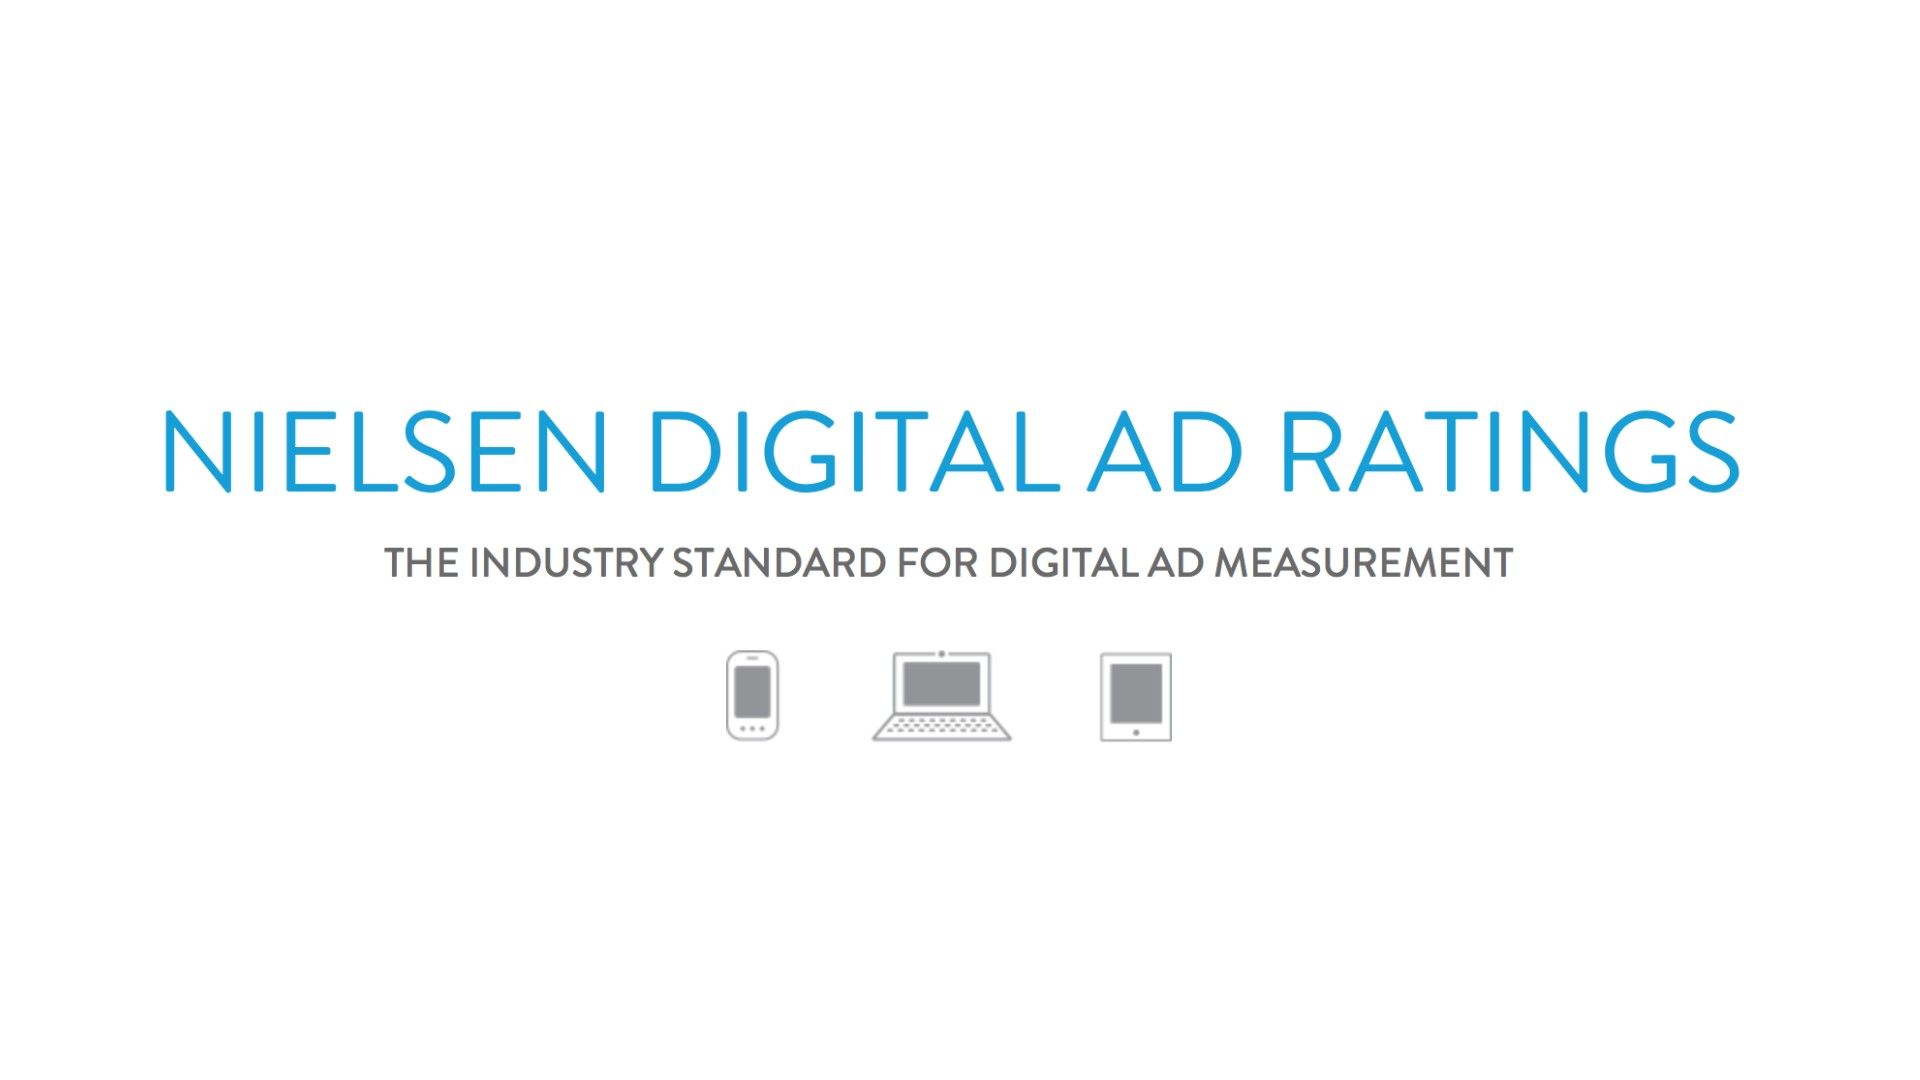 Google expands Nielsen mobile digital ad ratings (mDAR) measurement to more countries